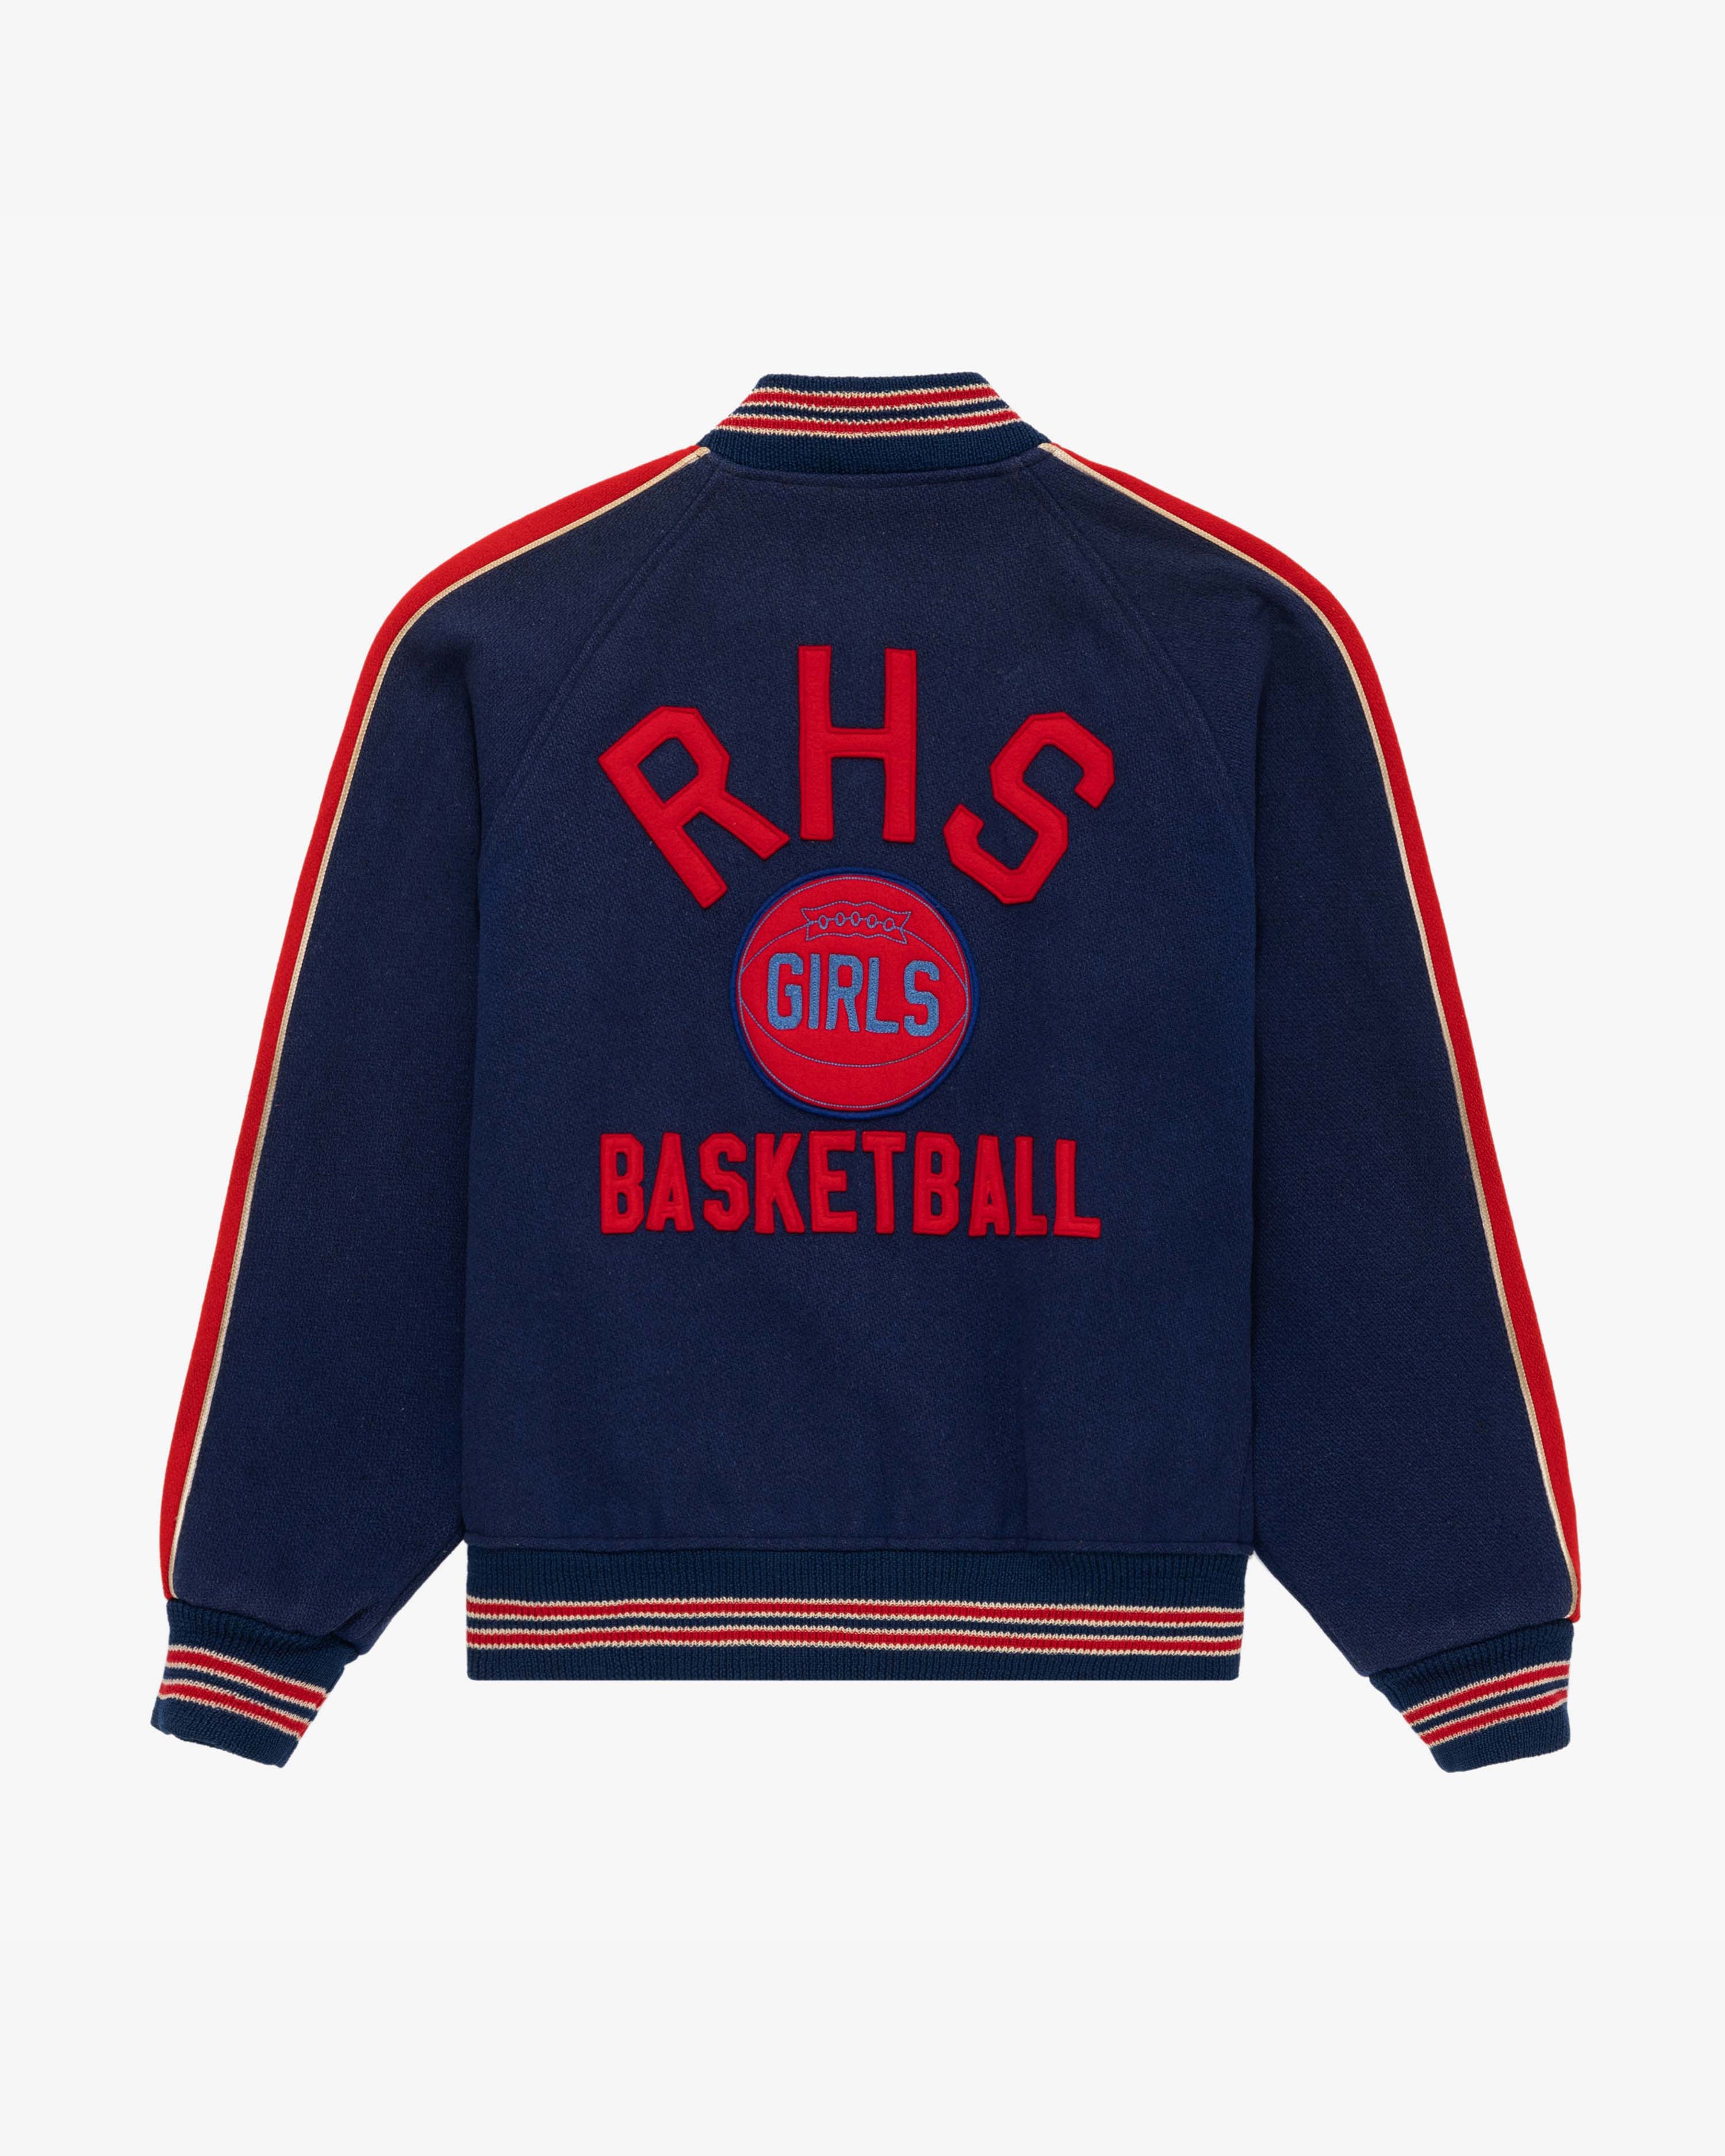 Vintage Women's Varsity Basketball Jacket